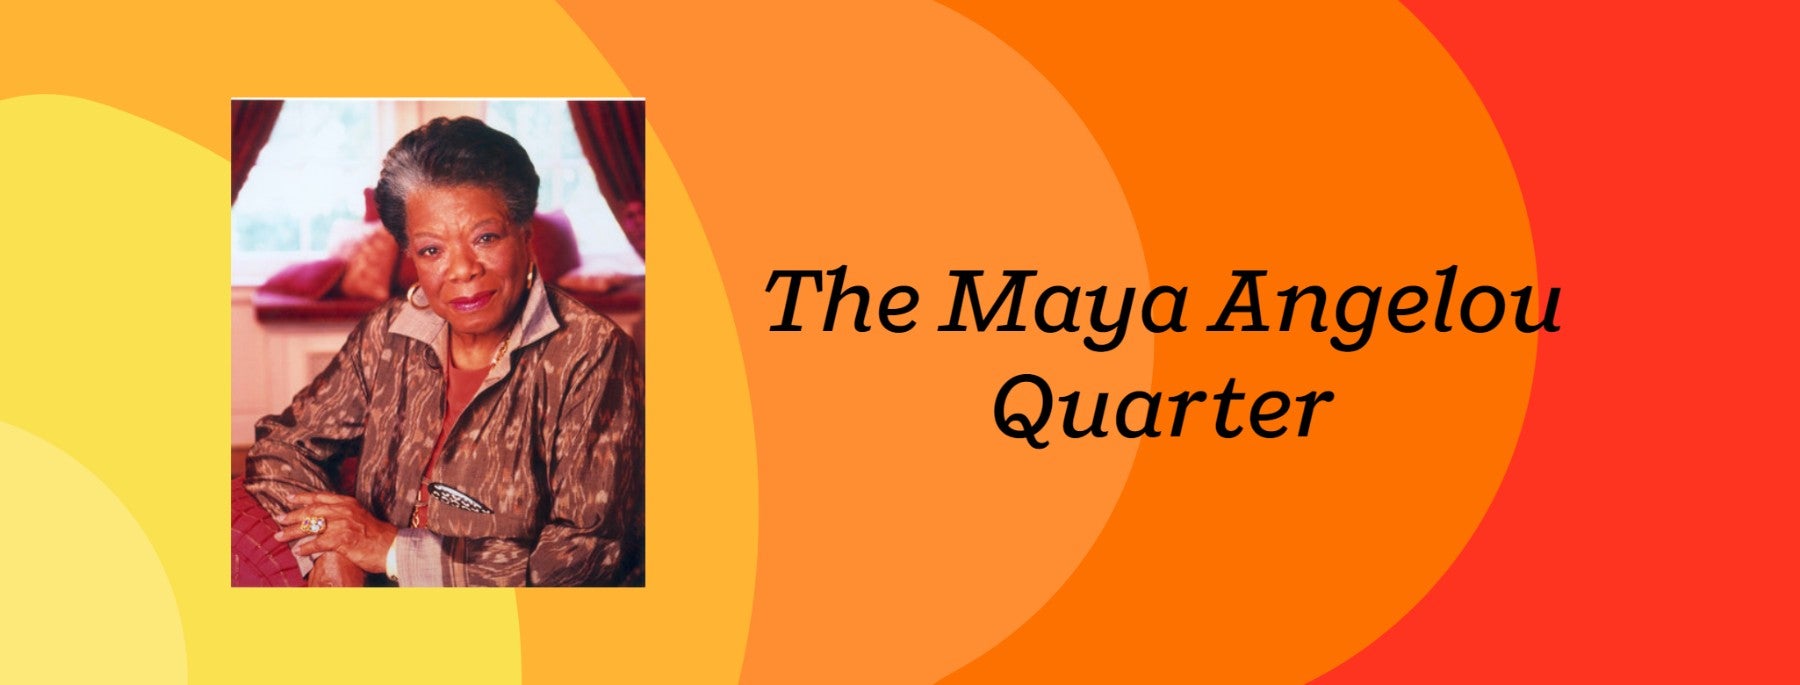 The Maya Angelou Quarter